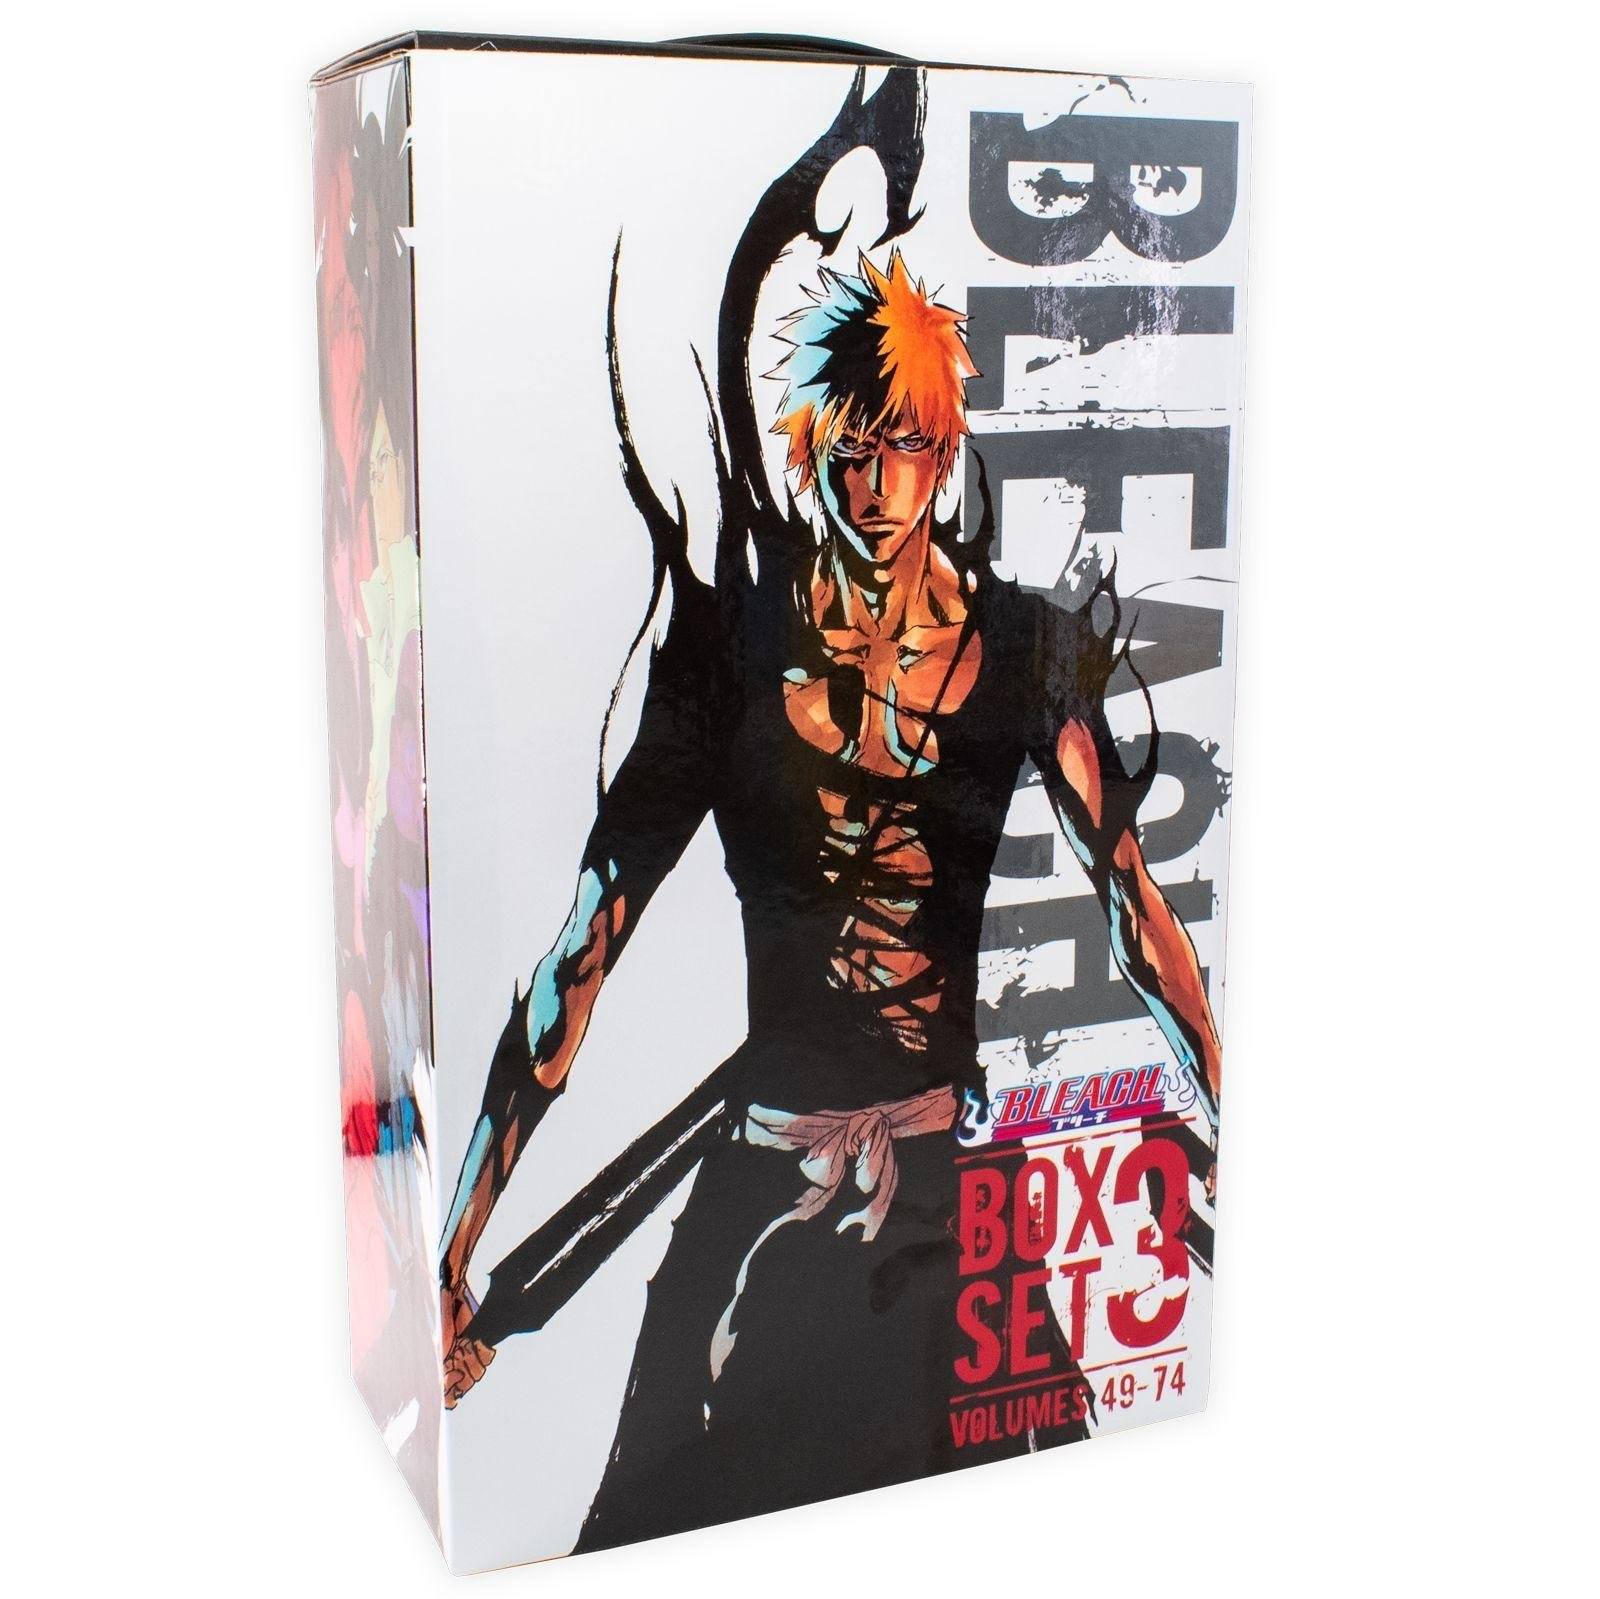 Bleach by Tite Kubo Box Set 3: Vol. 49-74 26 Manga Books - Ages 14 